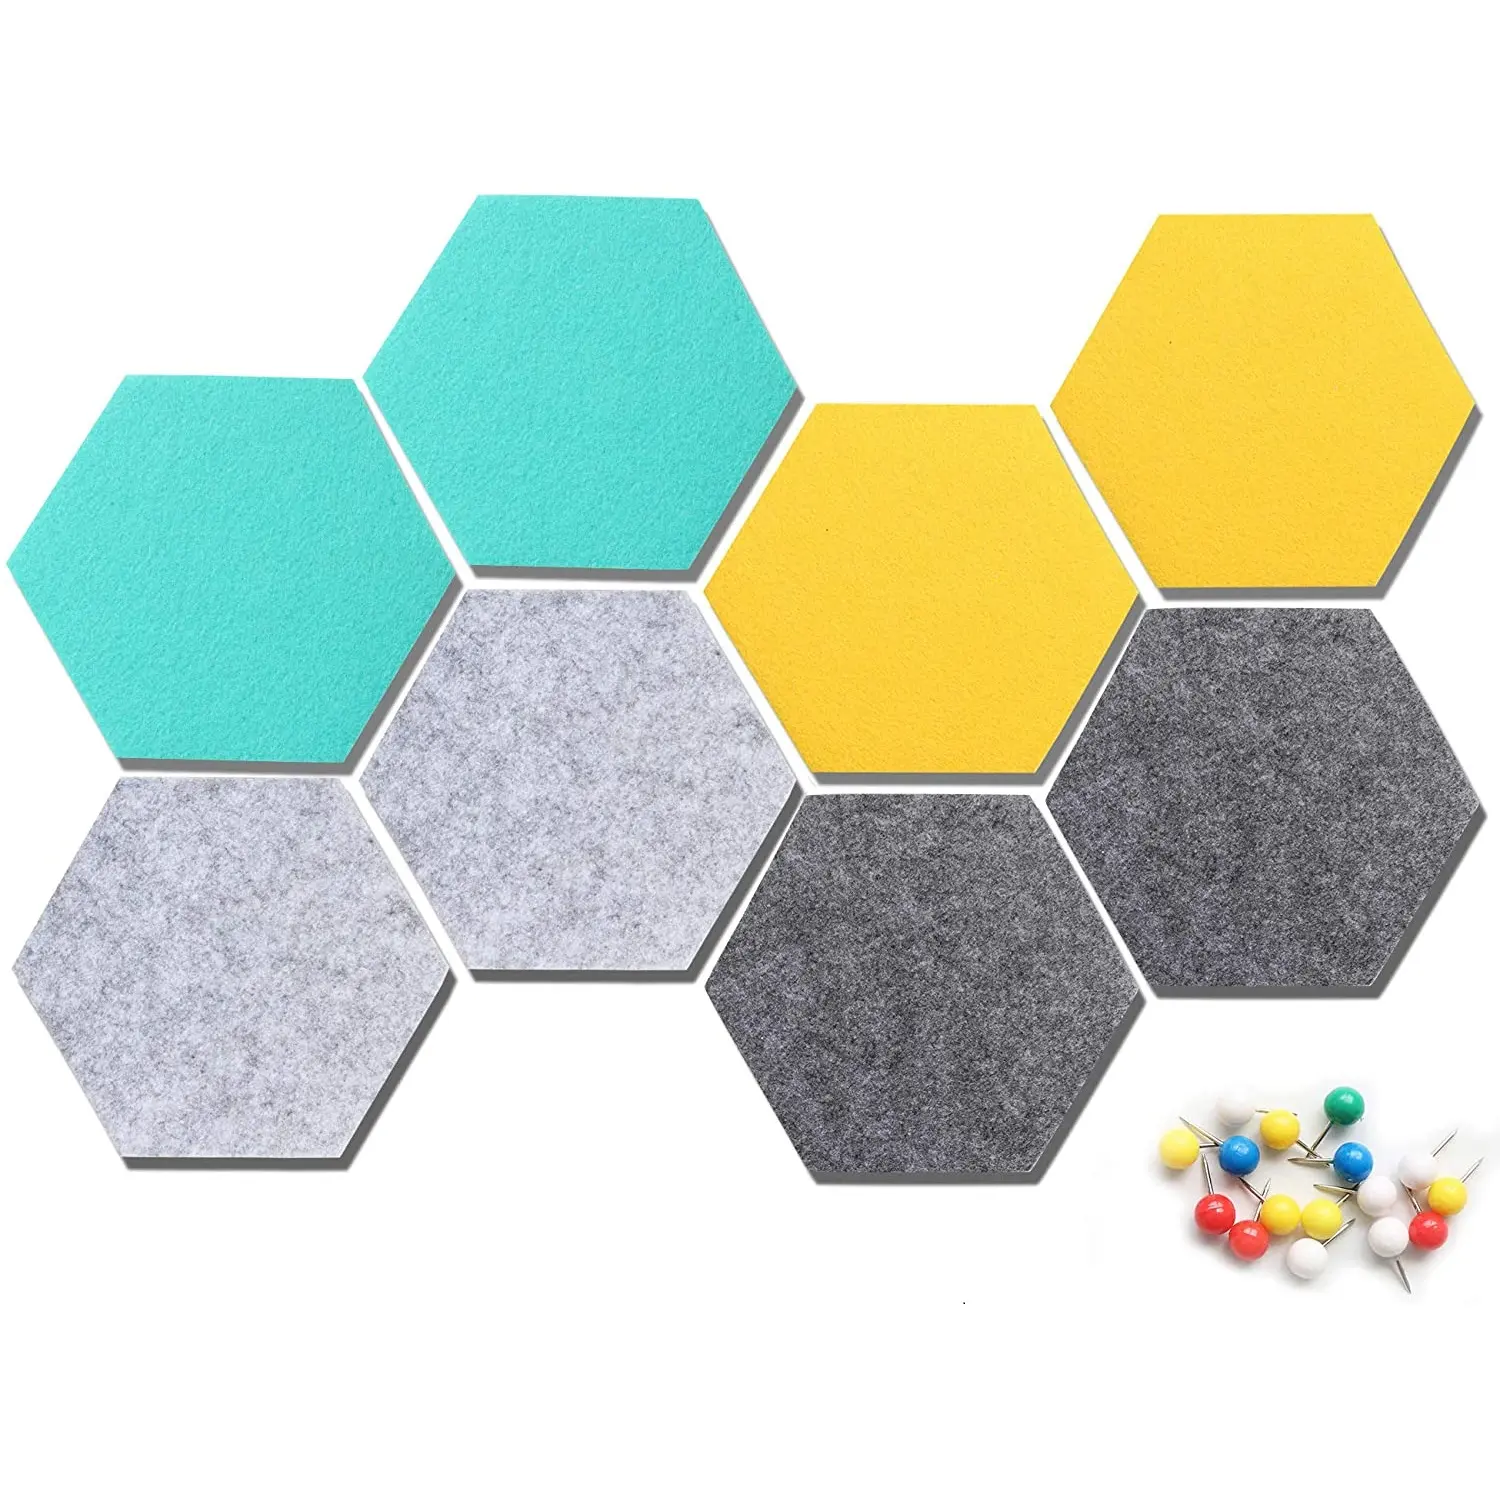 Home Decor Felt pinboard, Felt Tile Board-Self Adhesive Wall Bulletin Boards Hexagon Push Pin Board Wall Decor